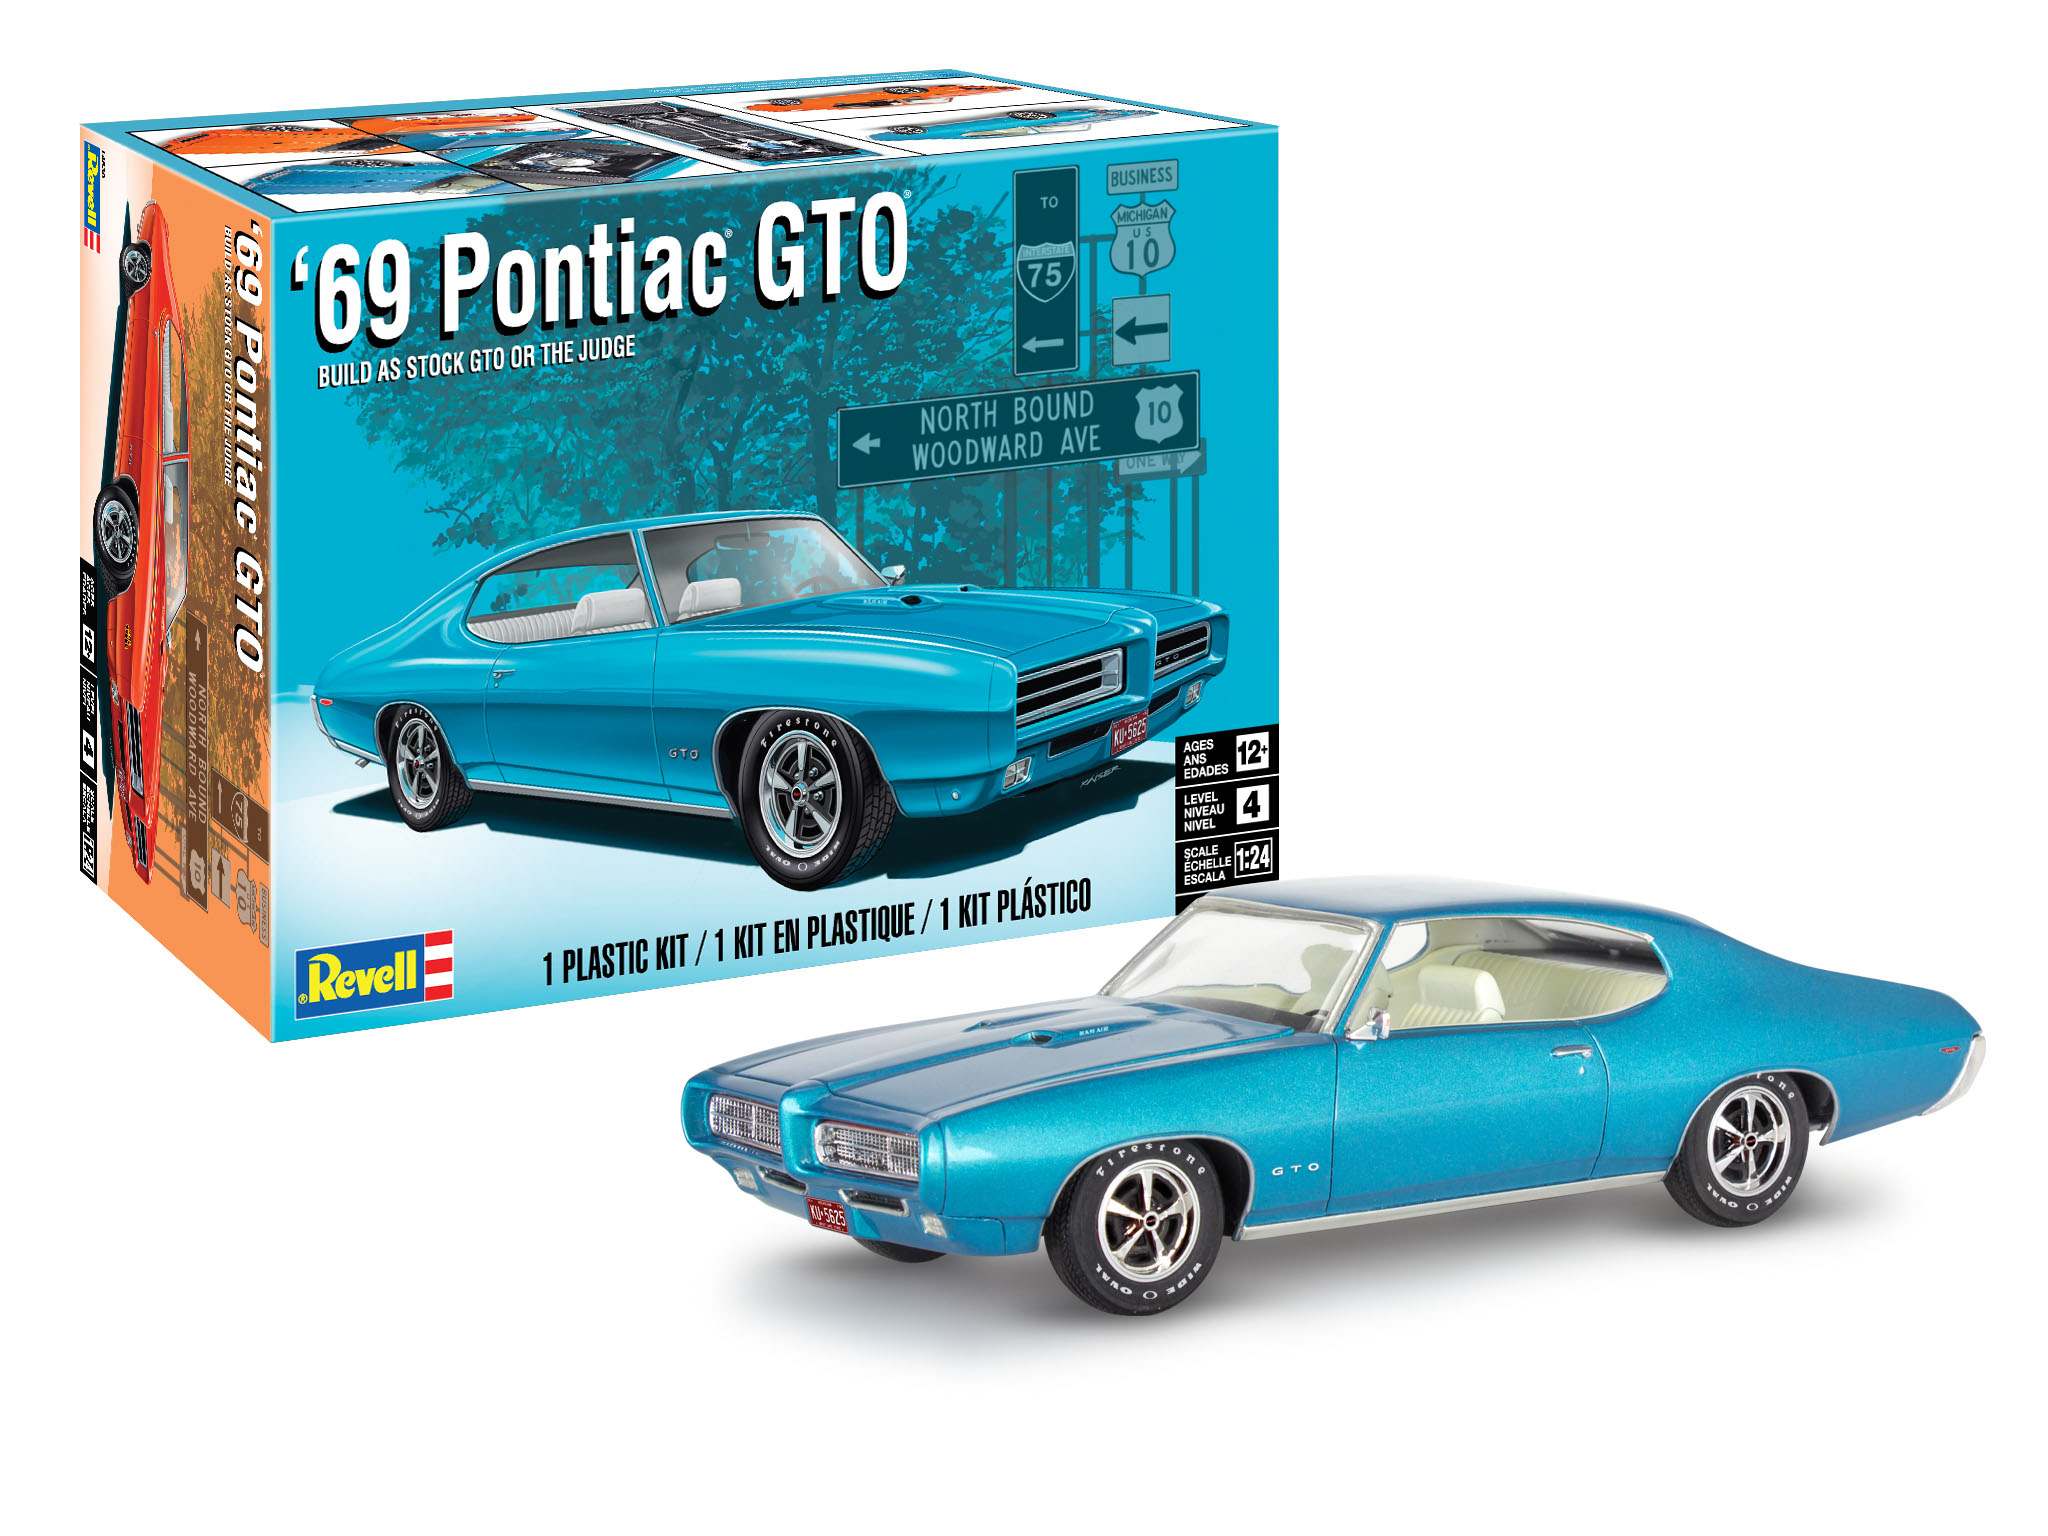 revell-14530-1969-Pontiac-GTO-The-Judge-2n1-kit-USA-Muscle-Car